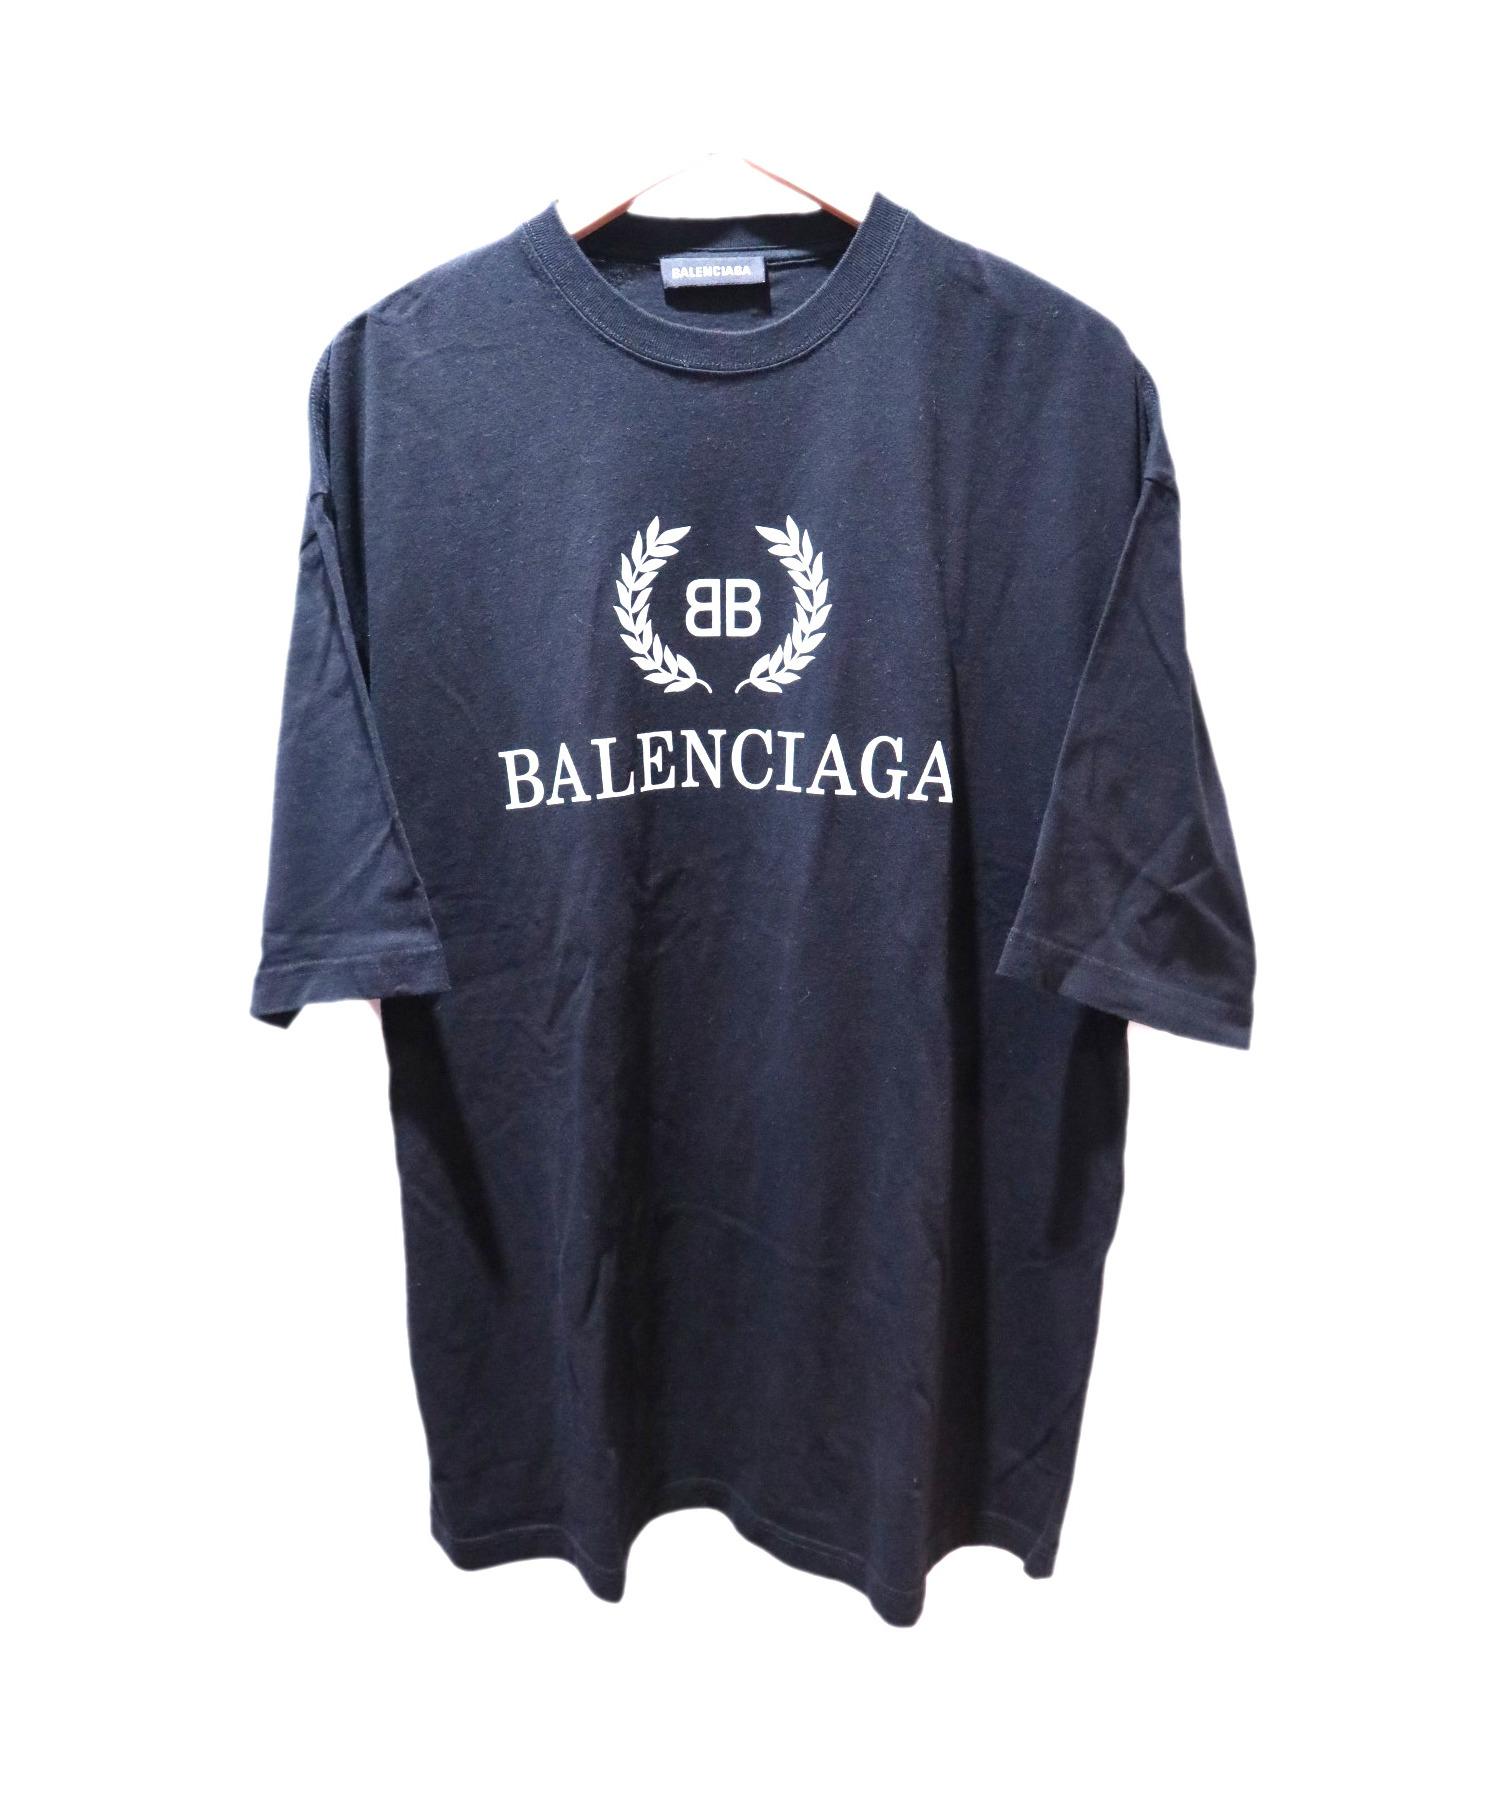 『BALENCIAGA』 バレンシアガ (XS) BBロゴ Tシャツ